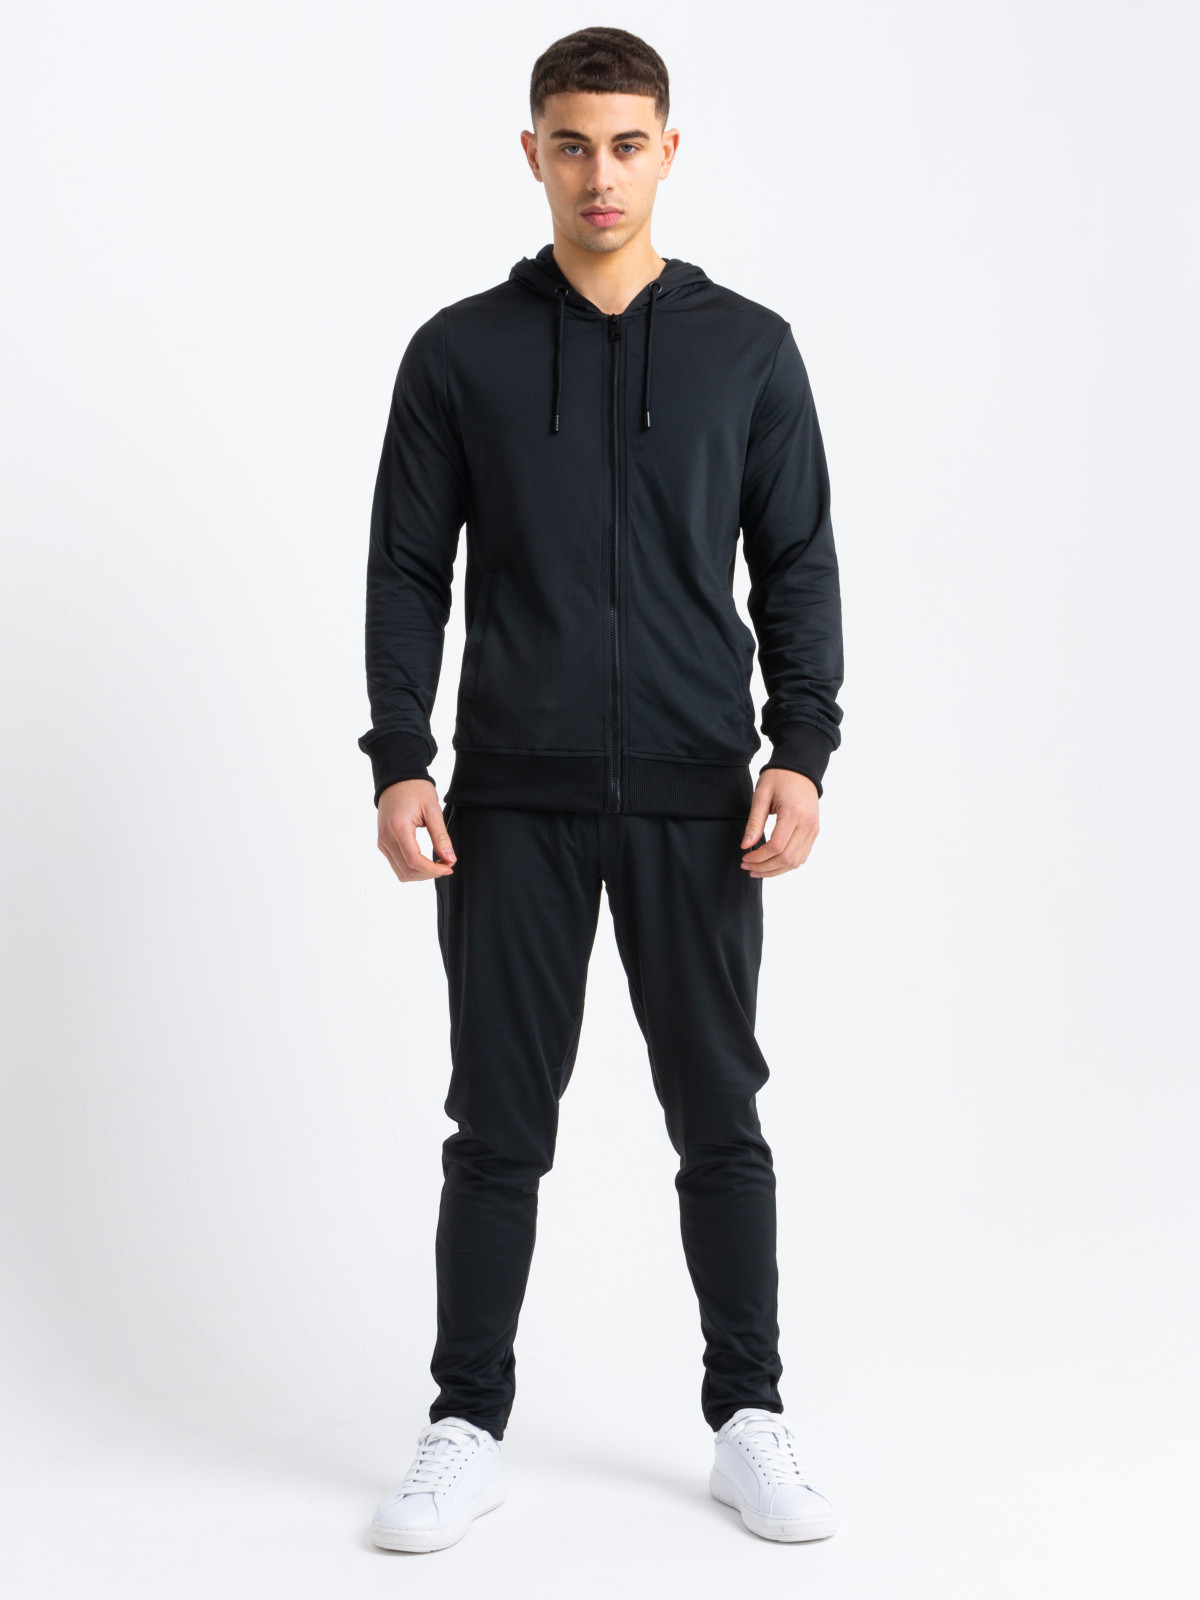 Flexy Tracksuit in Black | Men's Clothing & Fashion | HisColumn